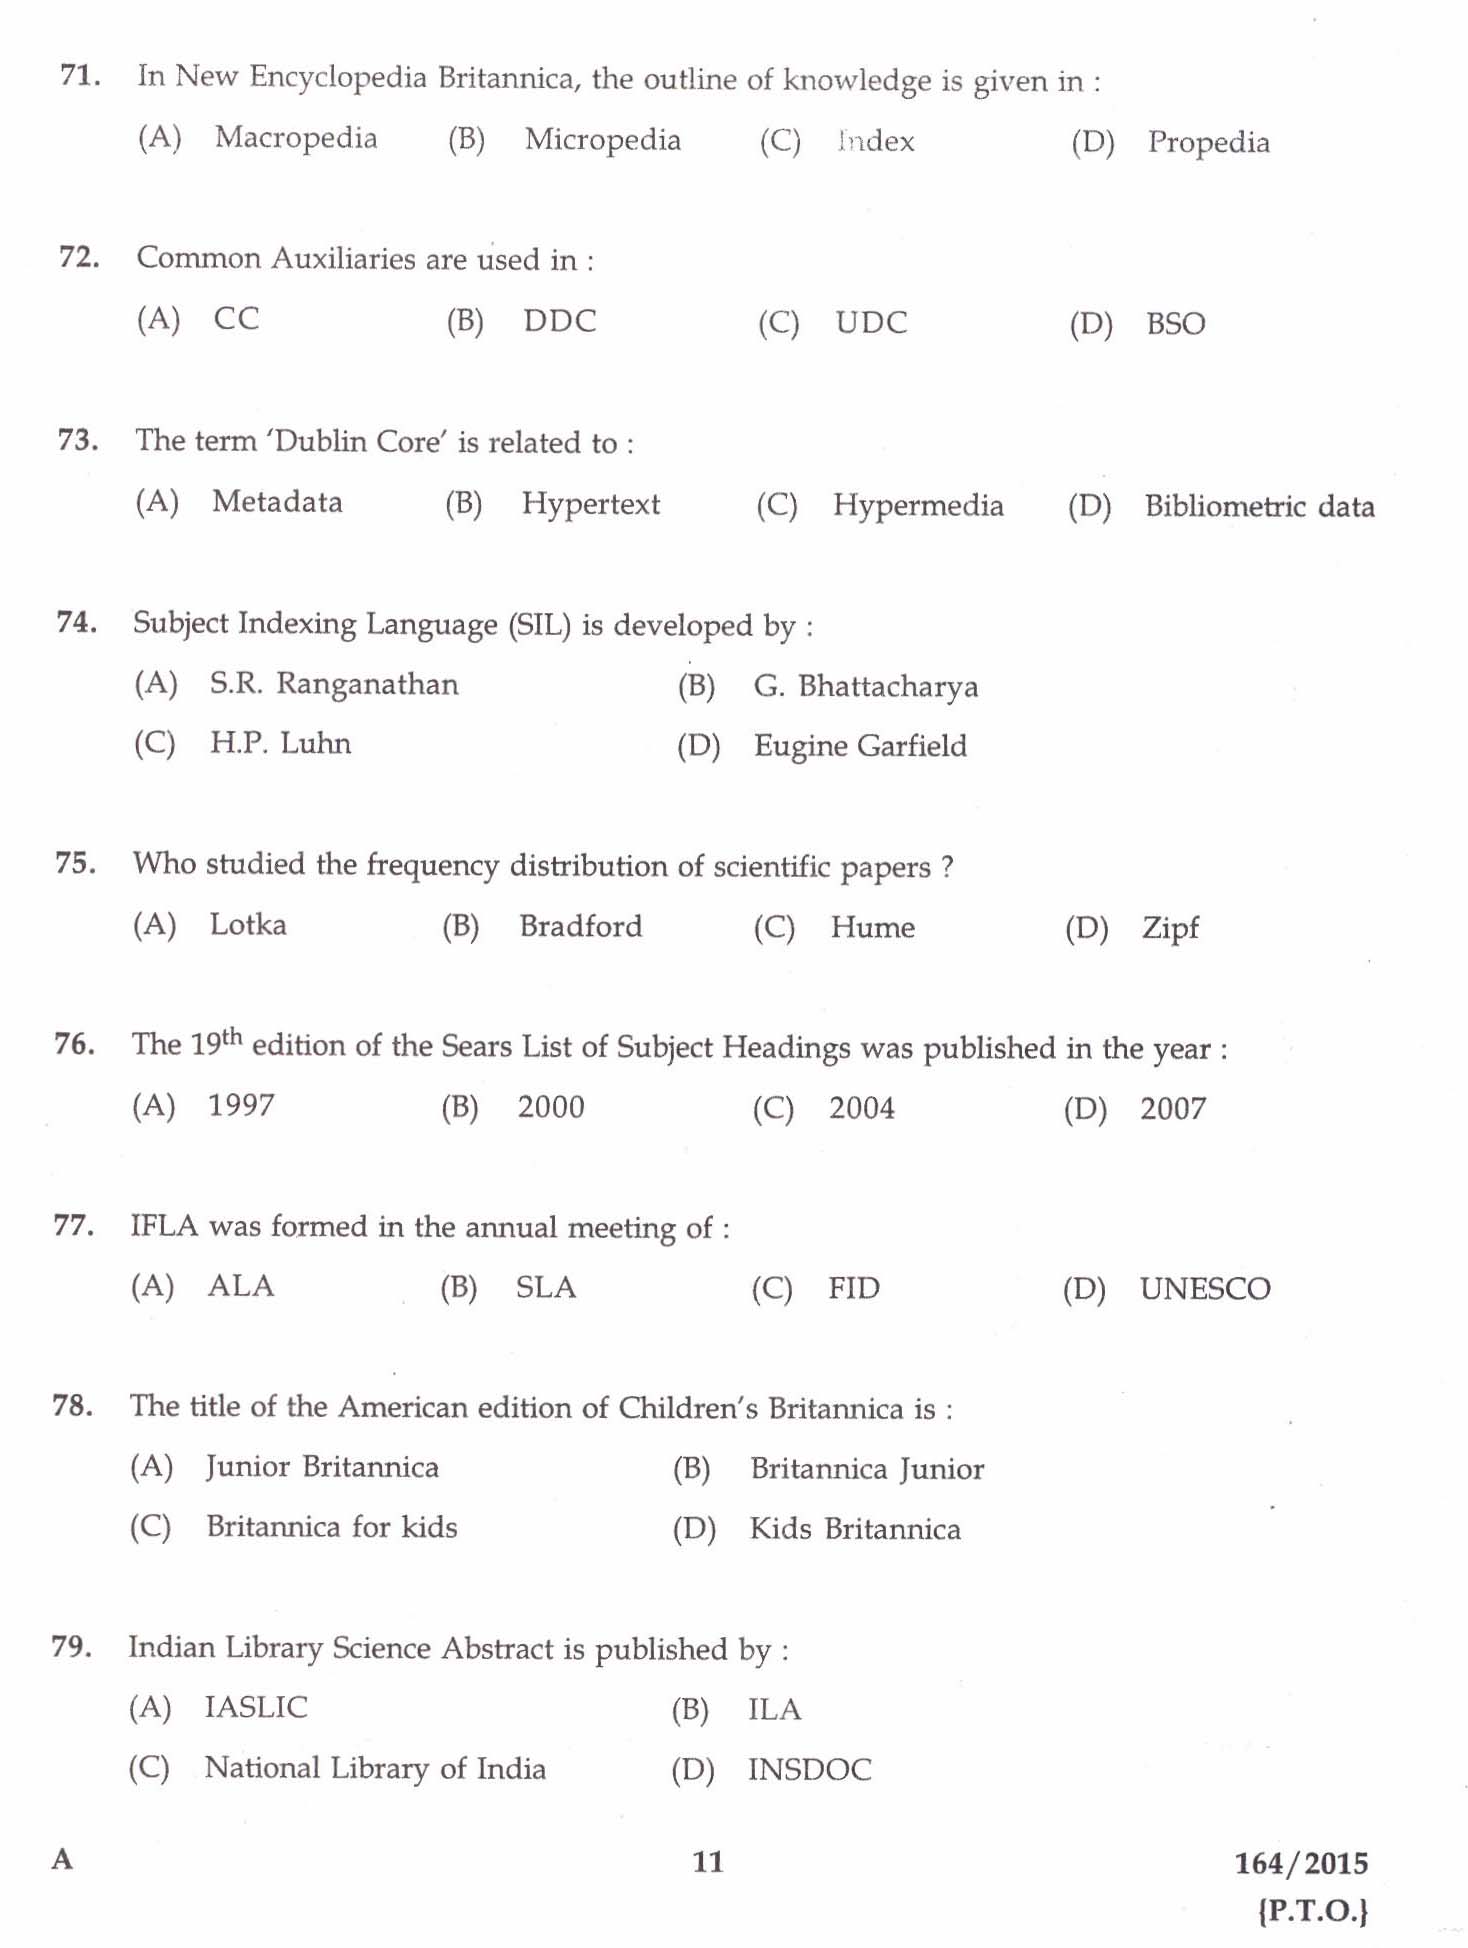 Kerala PSC Librarian Grade III Exam Question Code 1642015 9